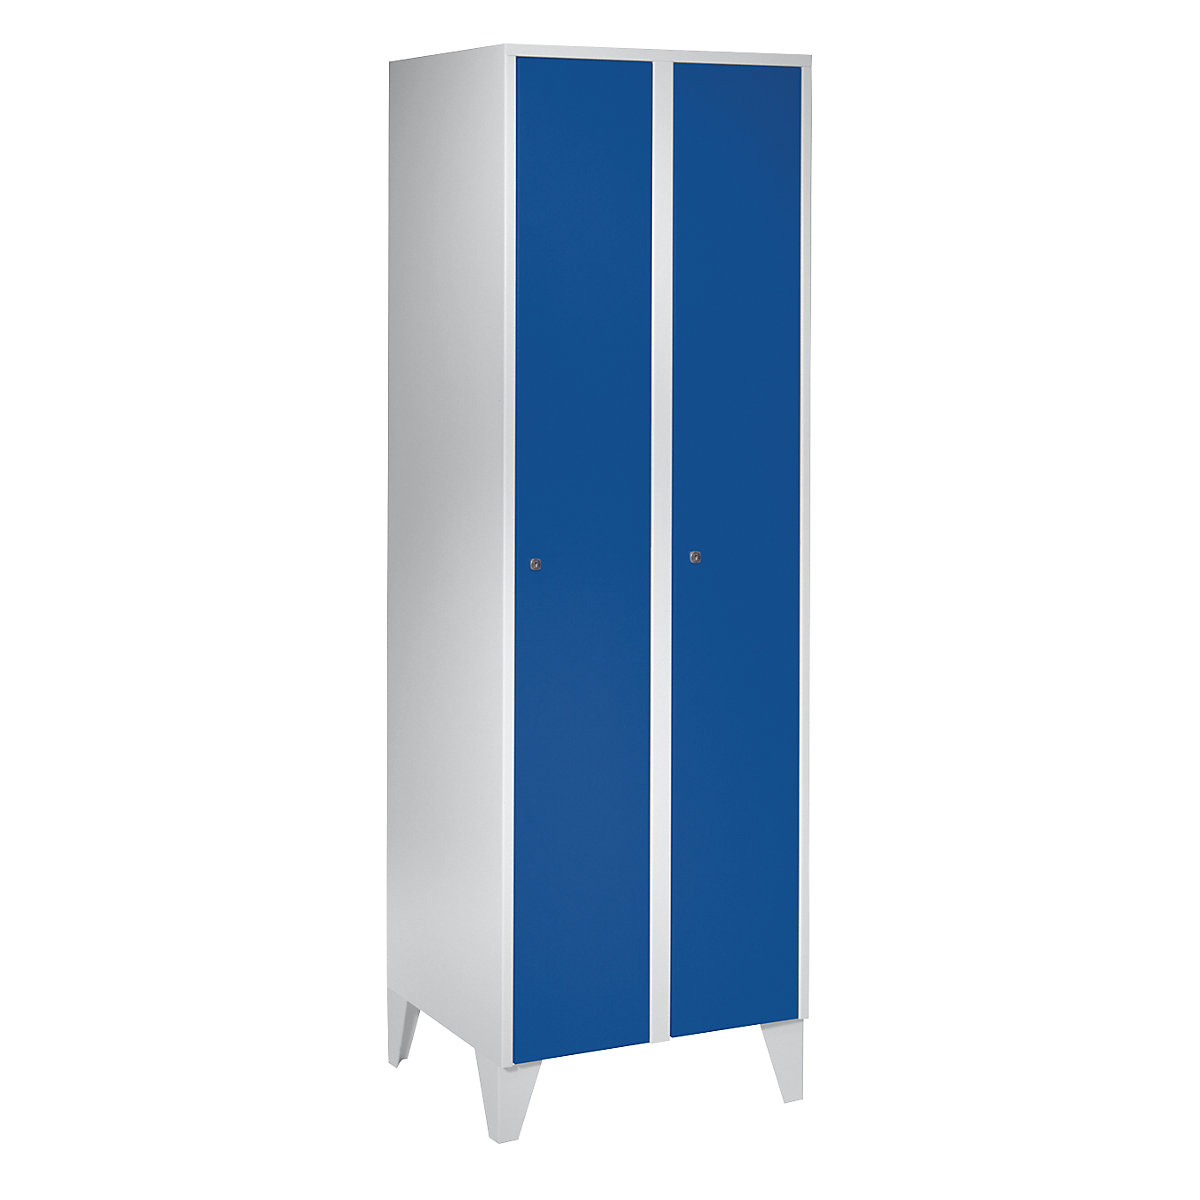 Cloakroom locker with feet – Wolf, HxWxD 1850 x 600 x 500 mm, 2 compartments, gentian blue-6